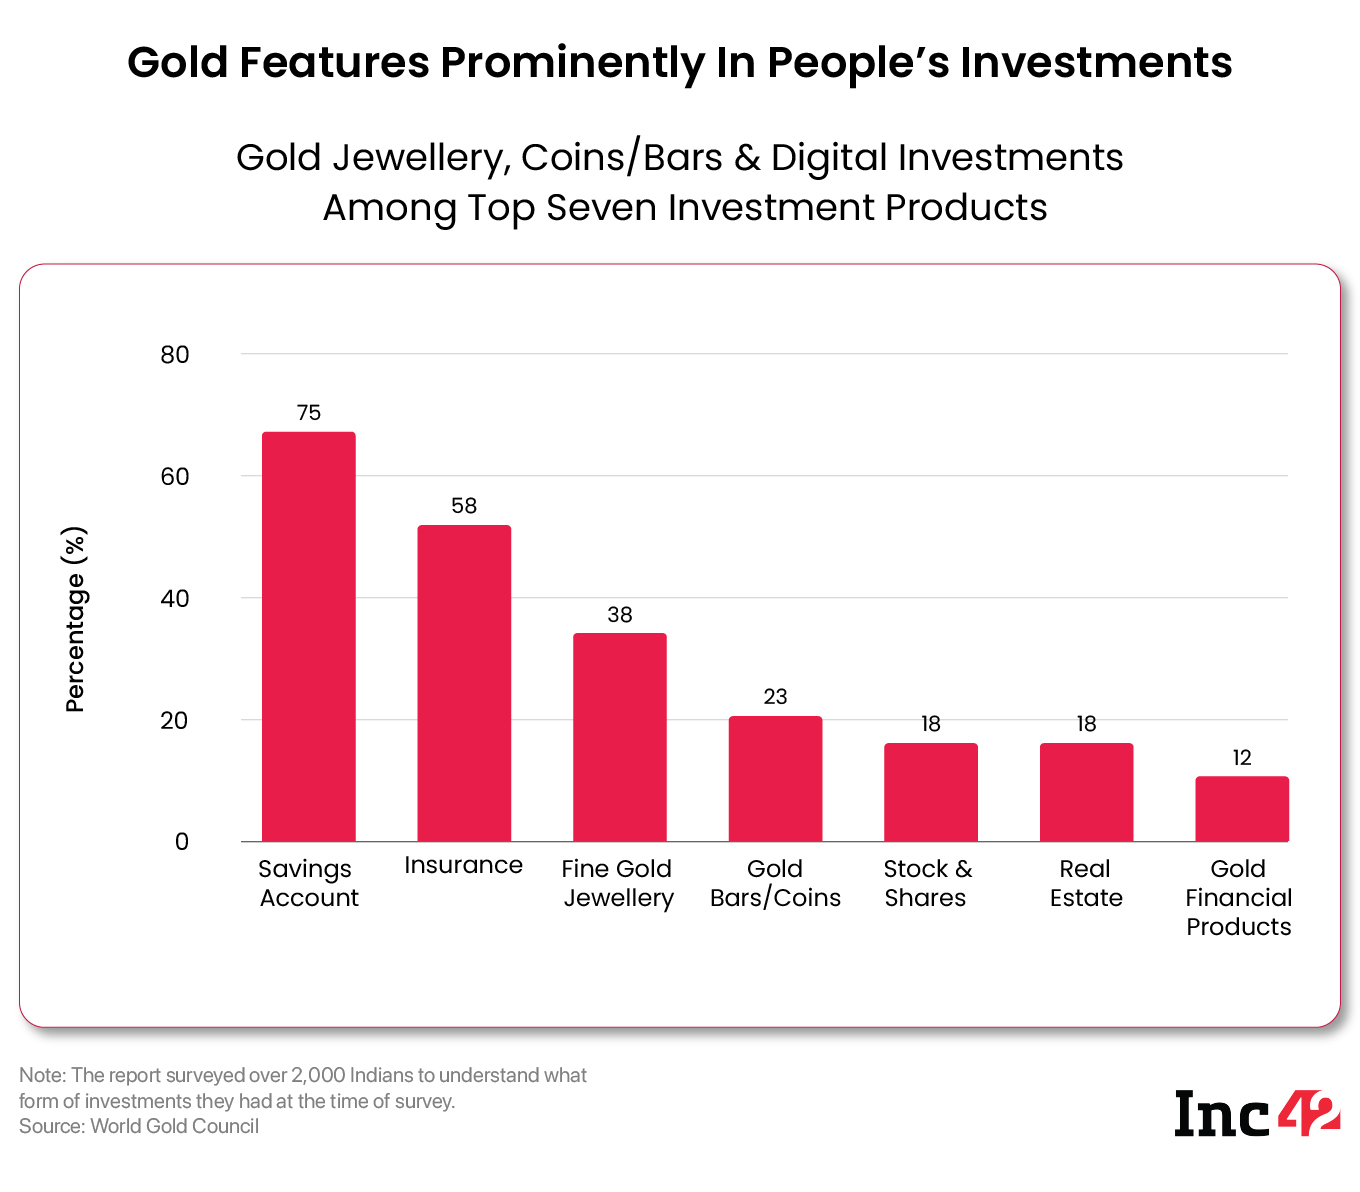 Will Festive Spirit Lift Up The Demand For Digital Gold & Loans?